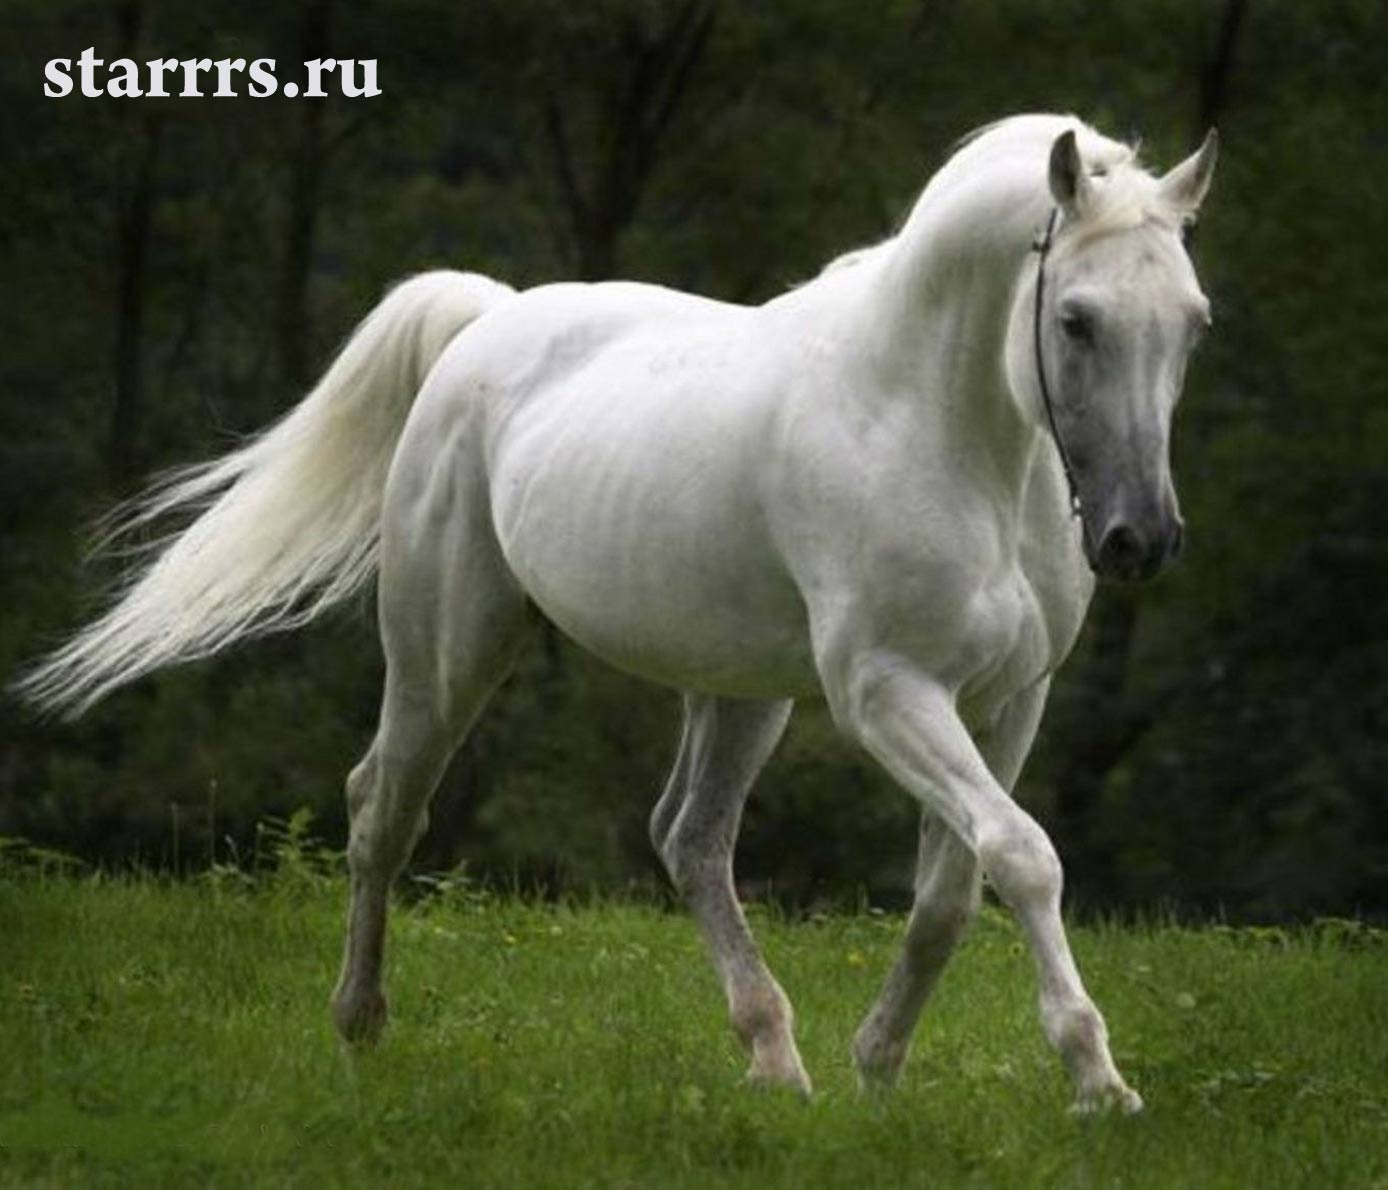 loshad_belaya_metallicheskaya_horse_white_metal